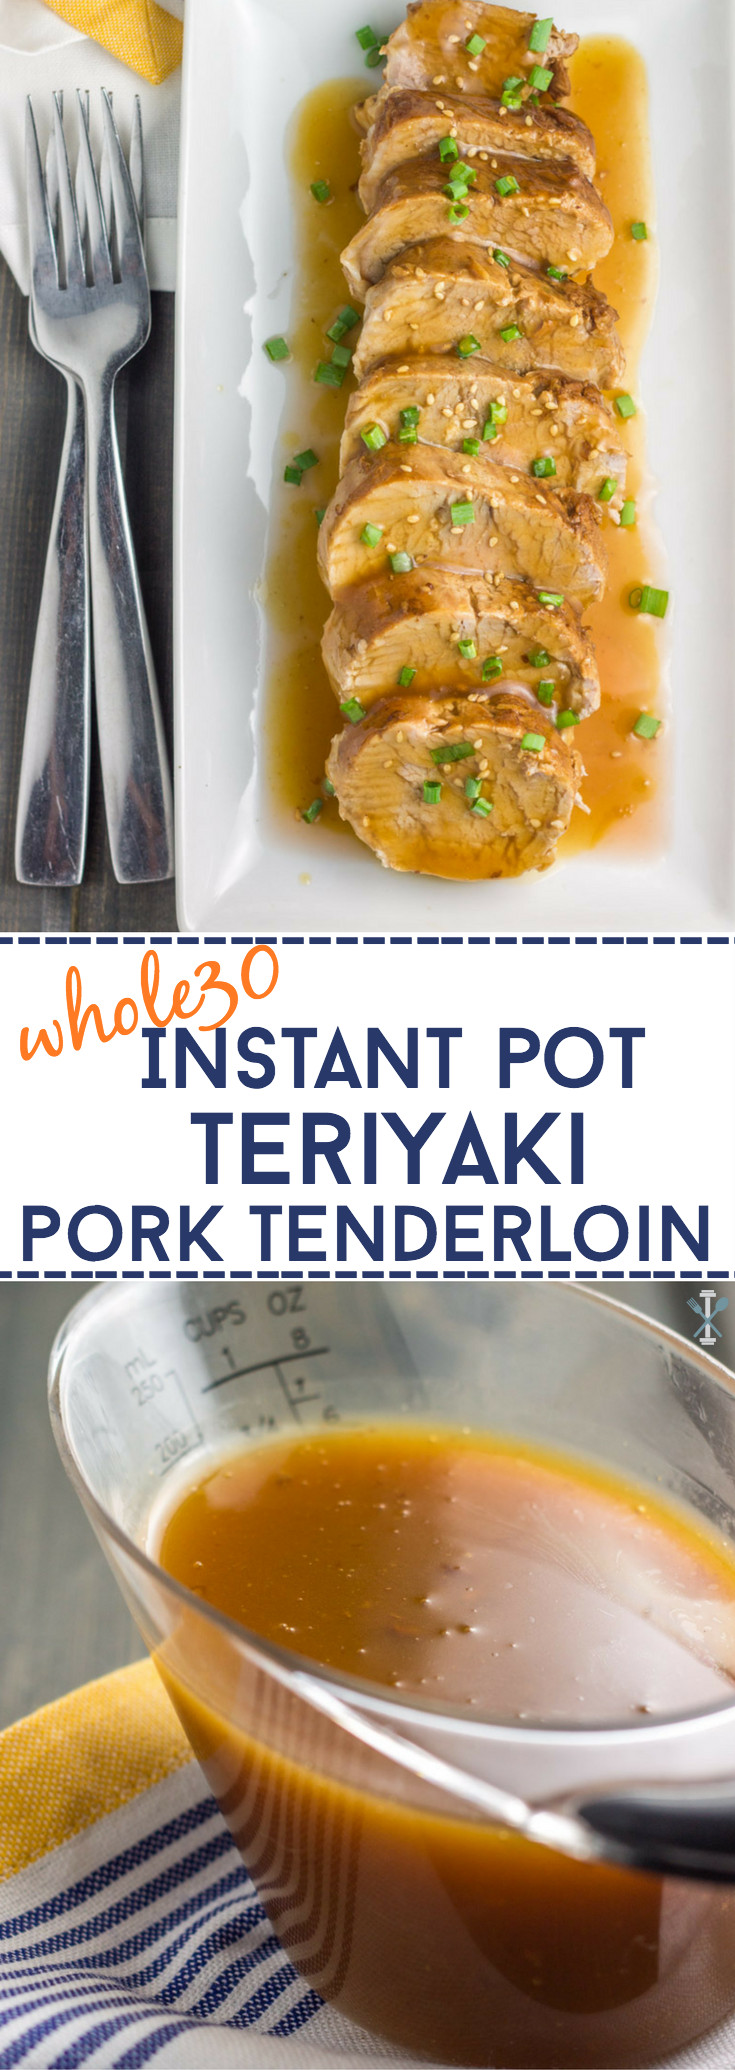 Pork Loin Instant Pot Paleo
 Whole30 Instant Pot Teriyaki Pork Tenderloin